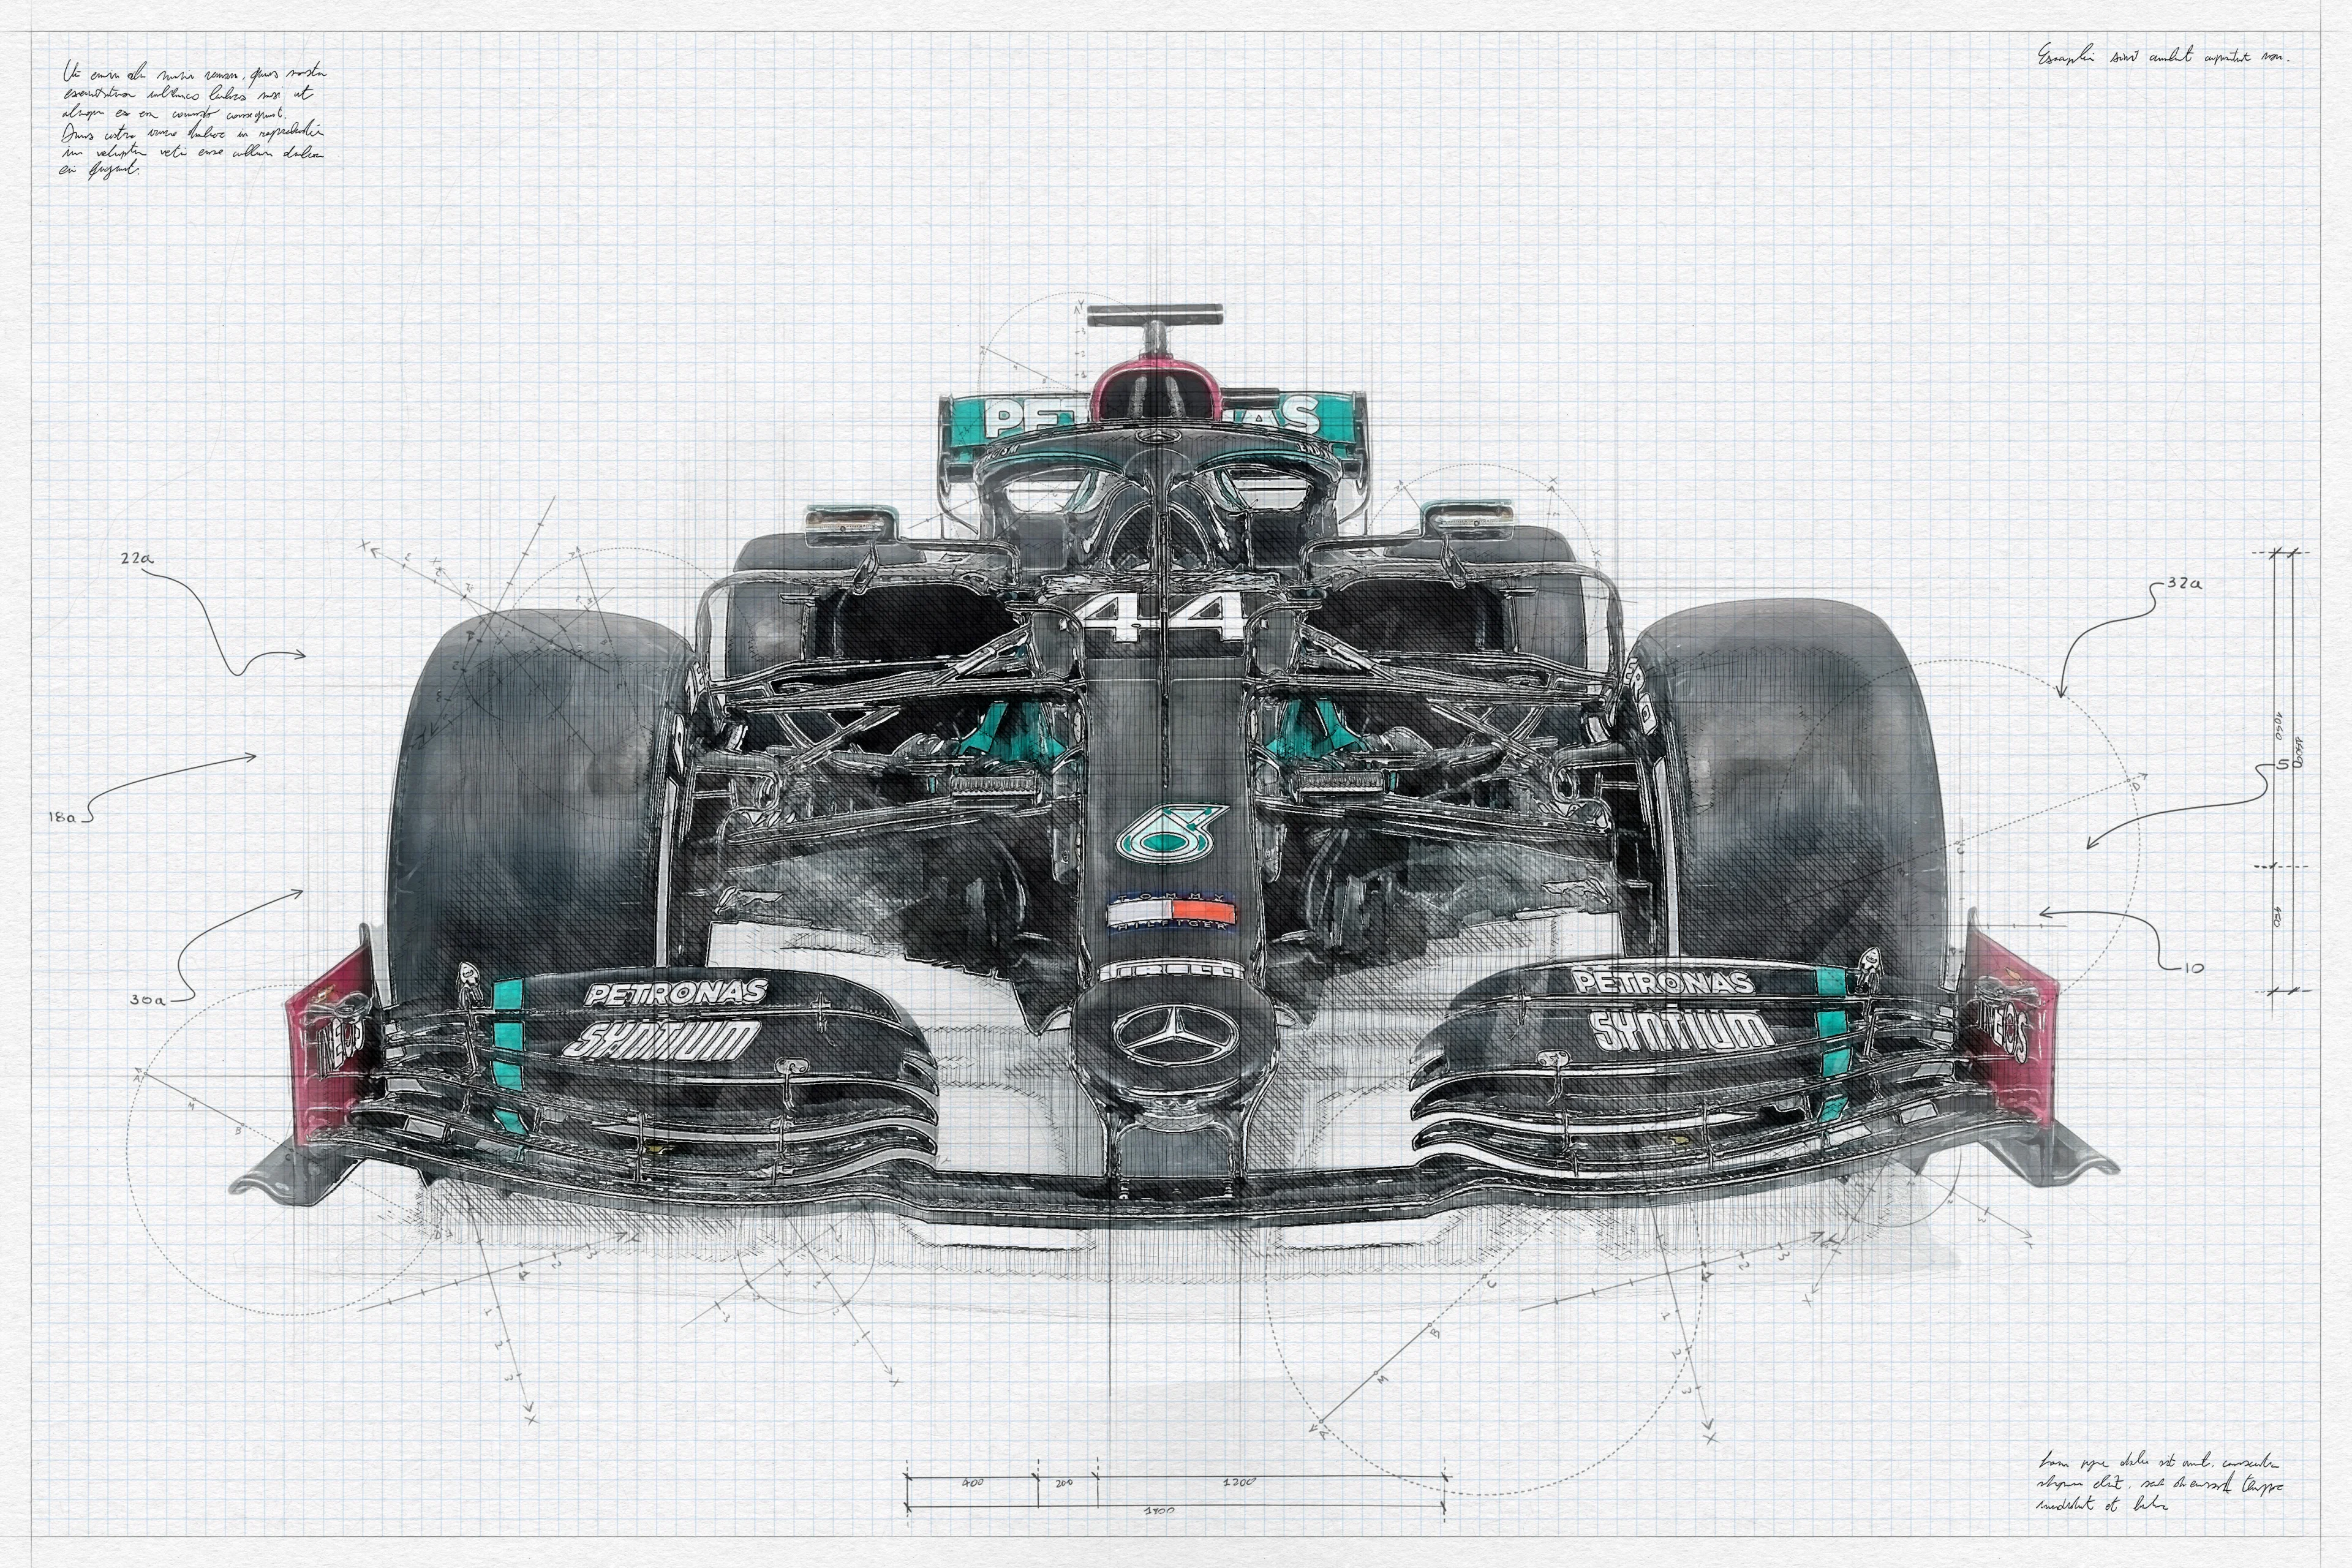 Mercedes AMG Petronas Formula One Team - Collection Officielle de